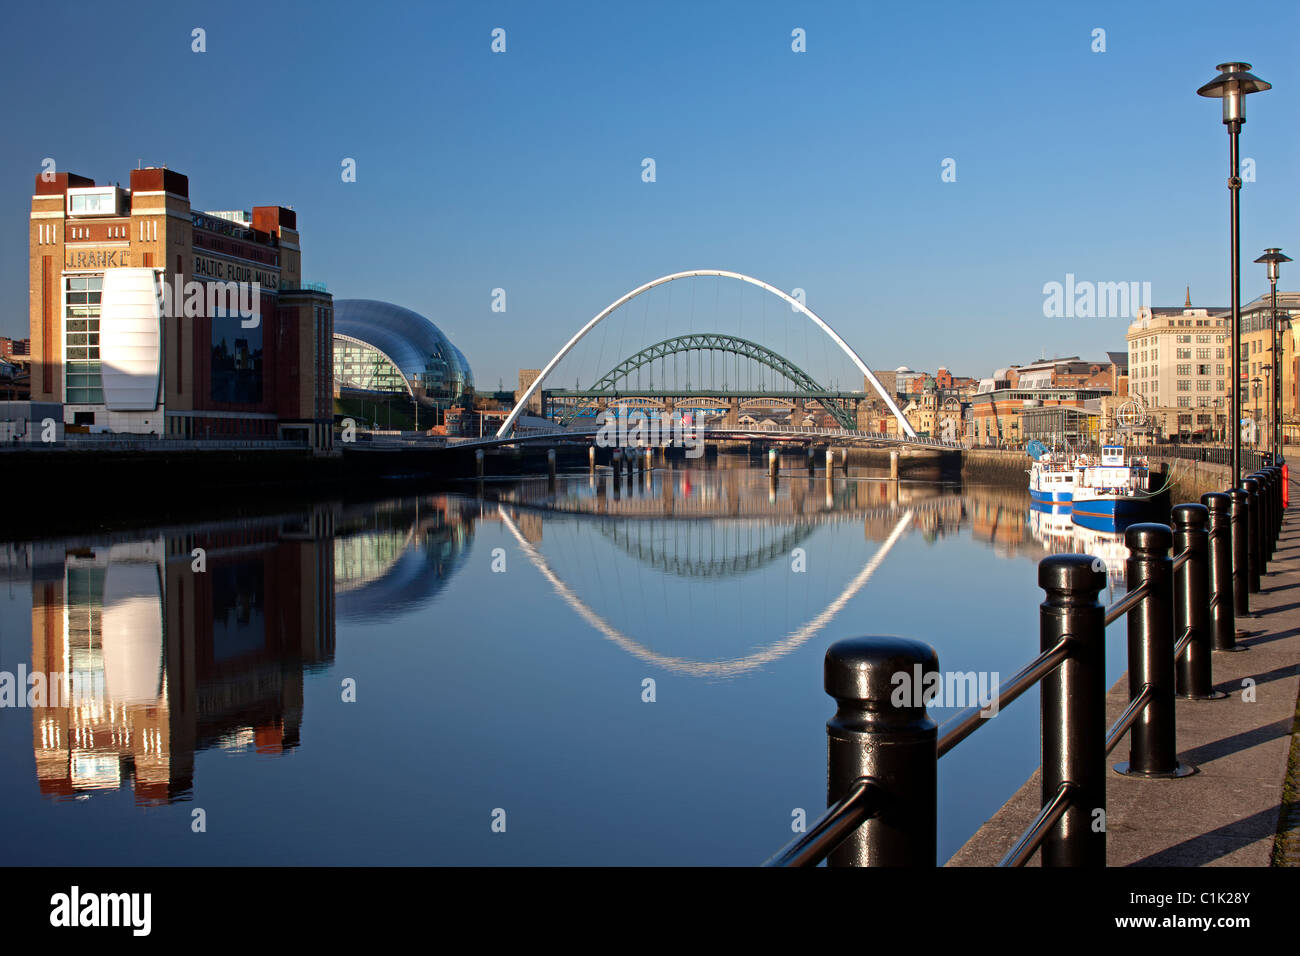 Newcastle Gateshead Quayside all'alba - mostra baltico, Il Sage Gateshead, Gateshead Millennium Bridge e Tyne Bridge Foto Stock